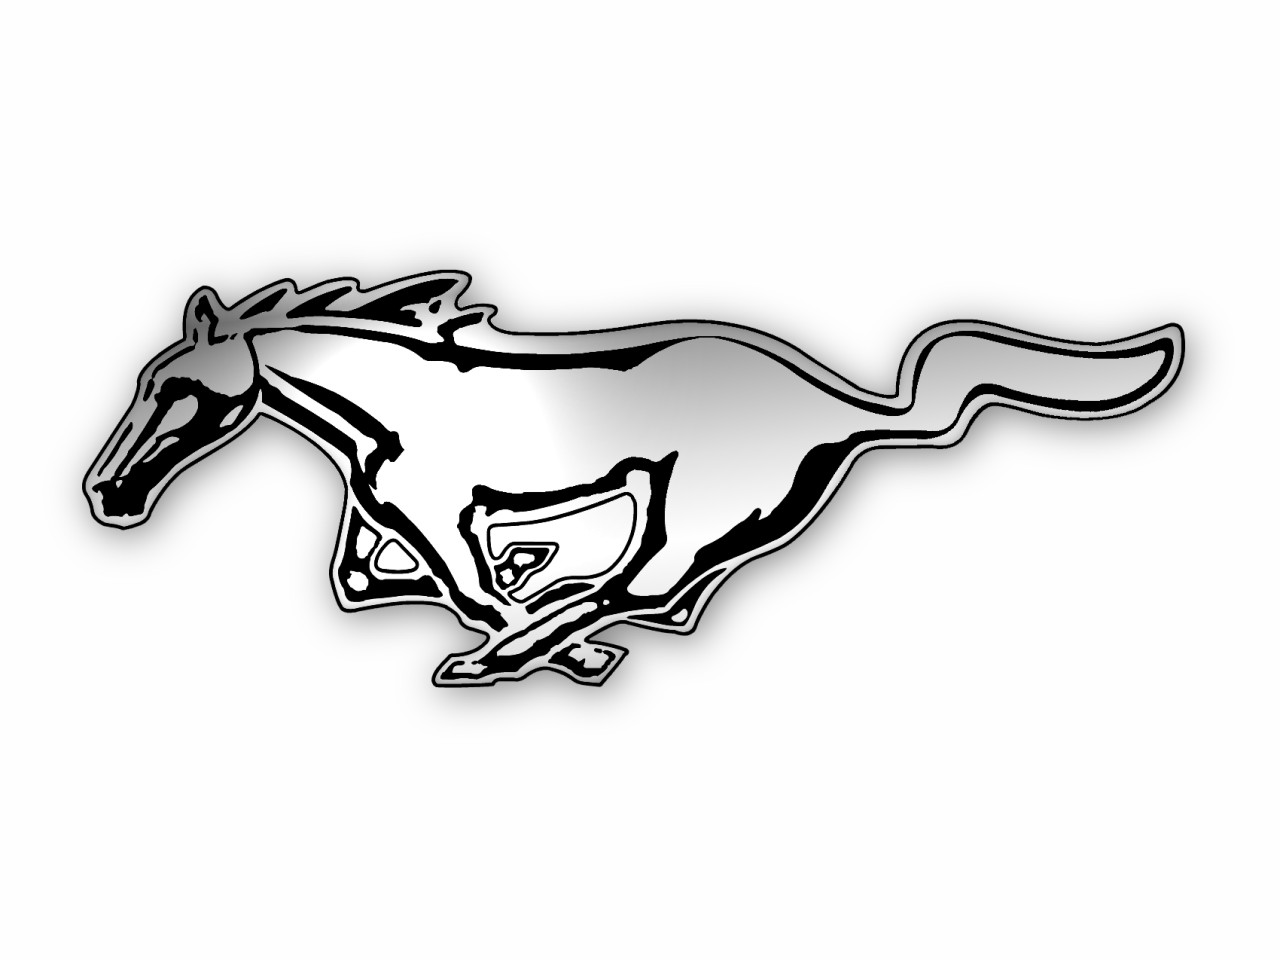 Mustang Logo Wallpaper 4991 Hd Wallpapers in Logos 